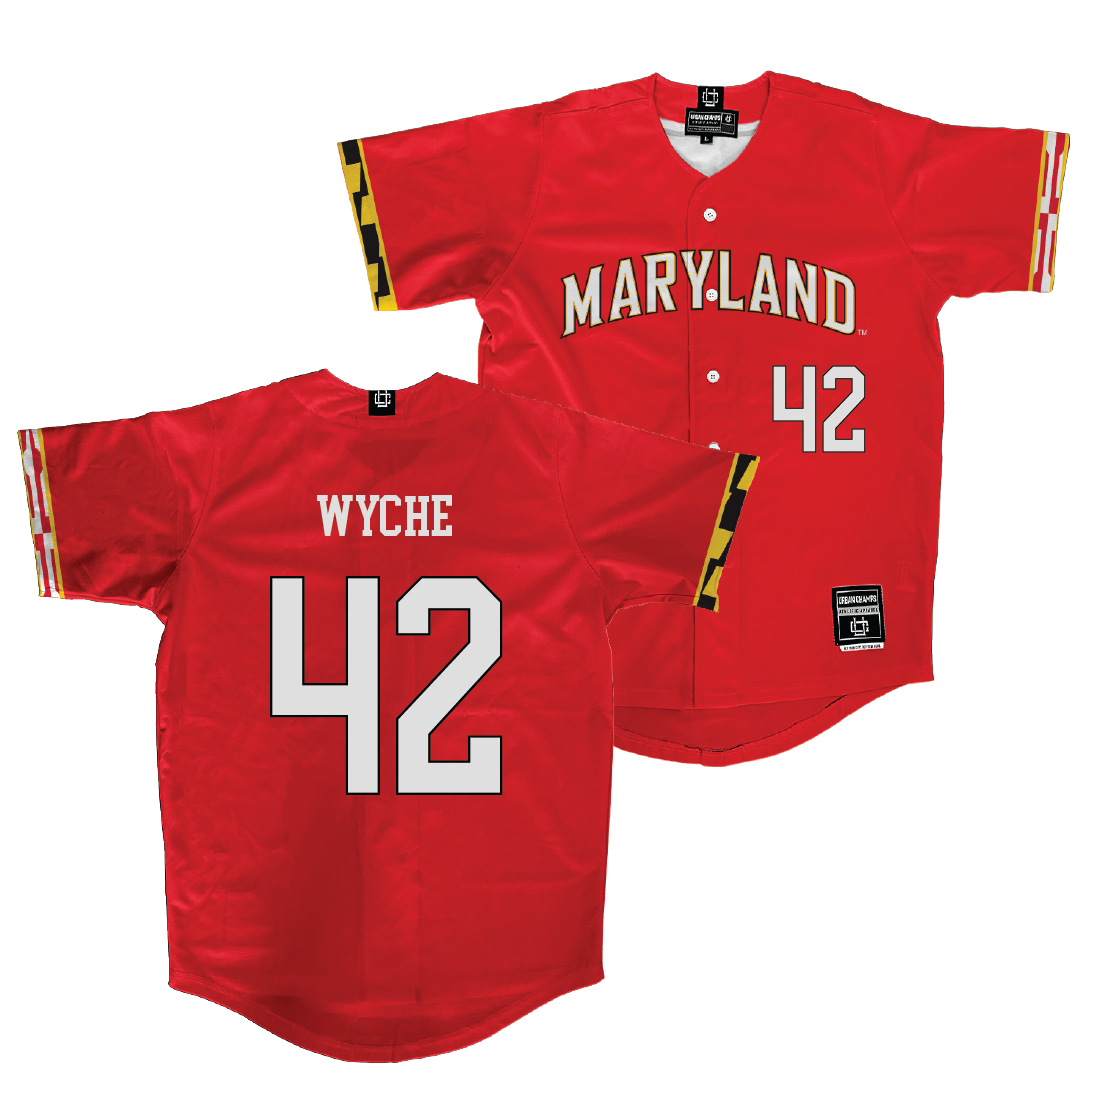 Maryland Softball Red Jersey - Courtney Wyche | #42